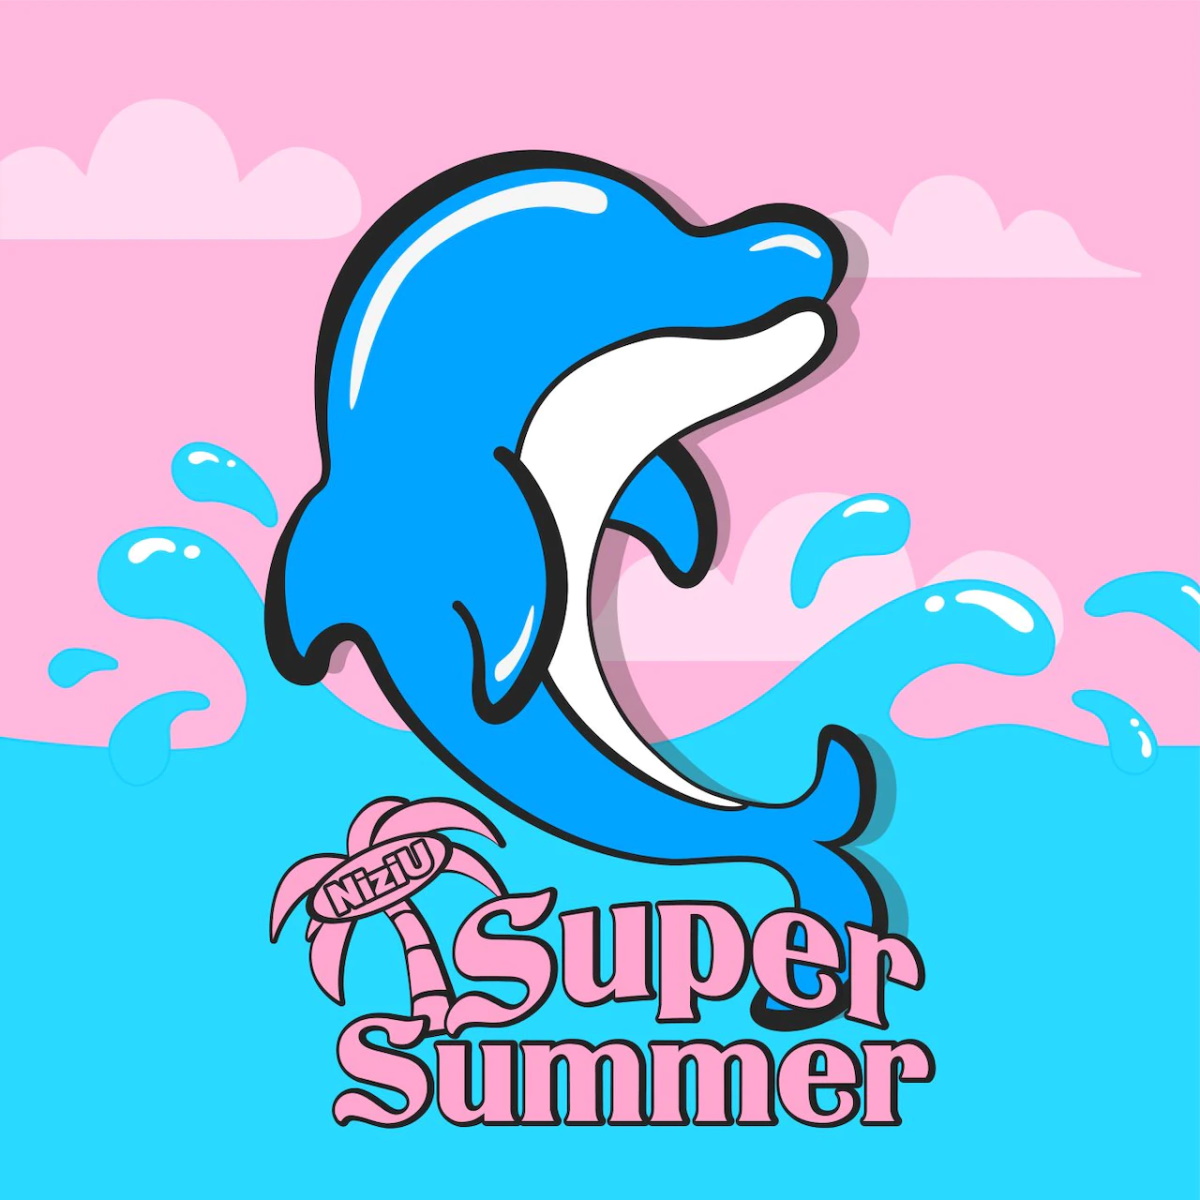 『NiziU - Super Summer 歌詞』収録の『Super Summer』ジャケット